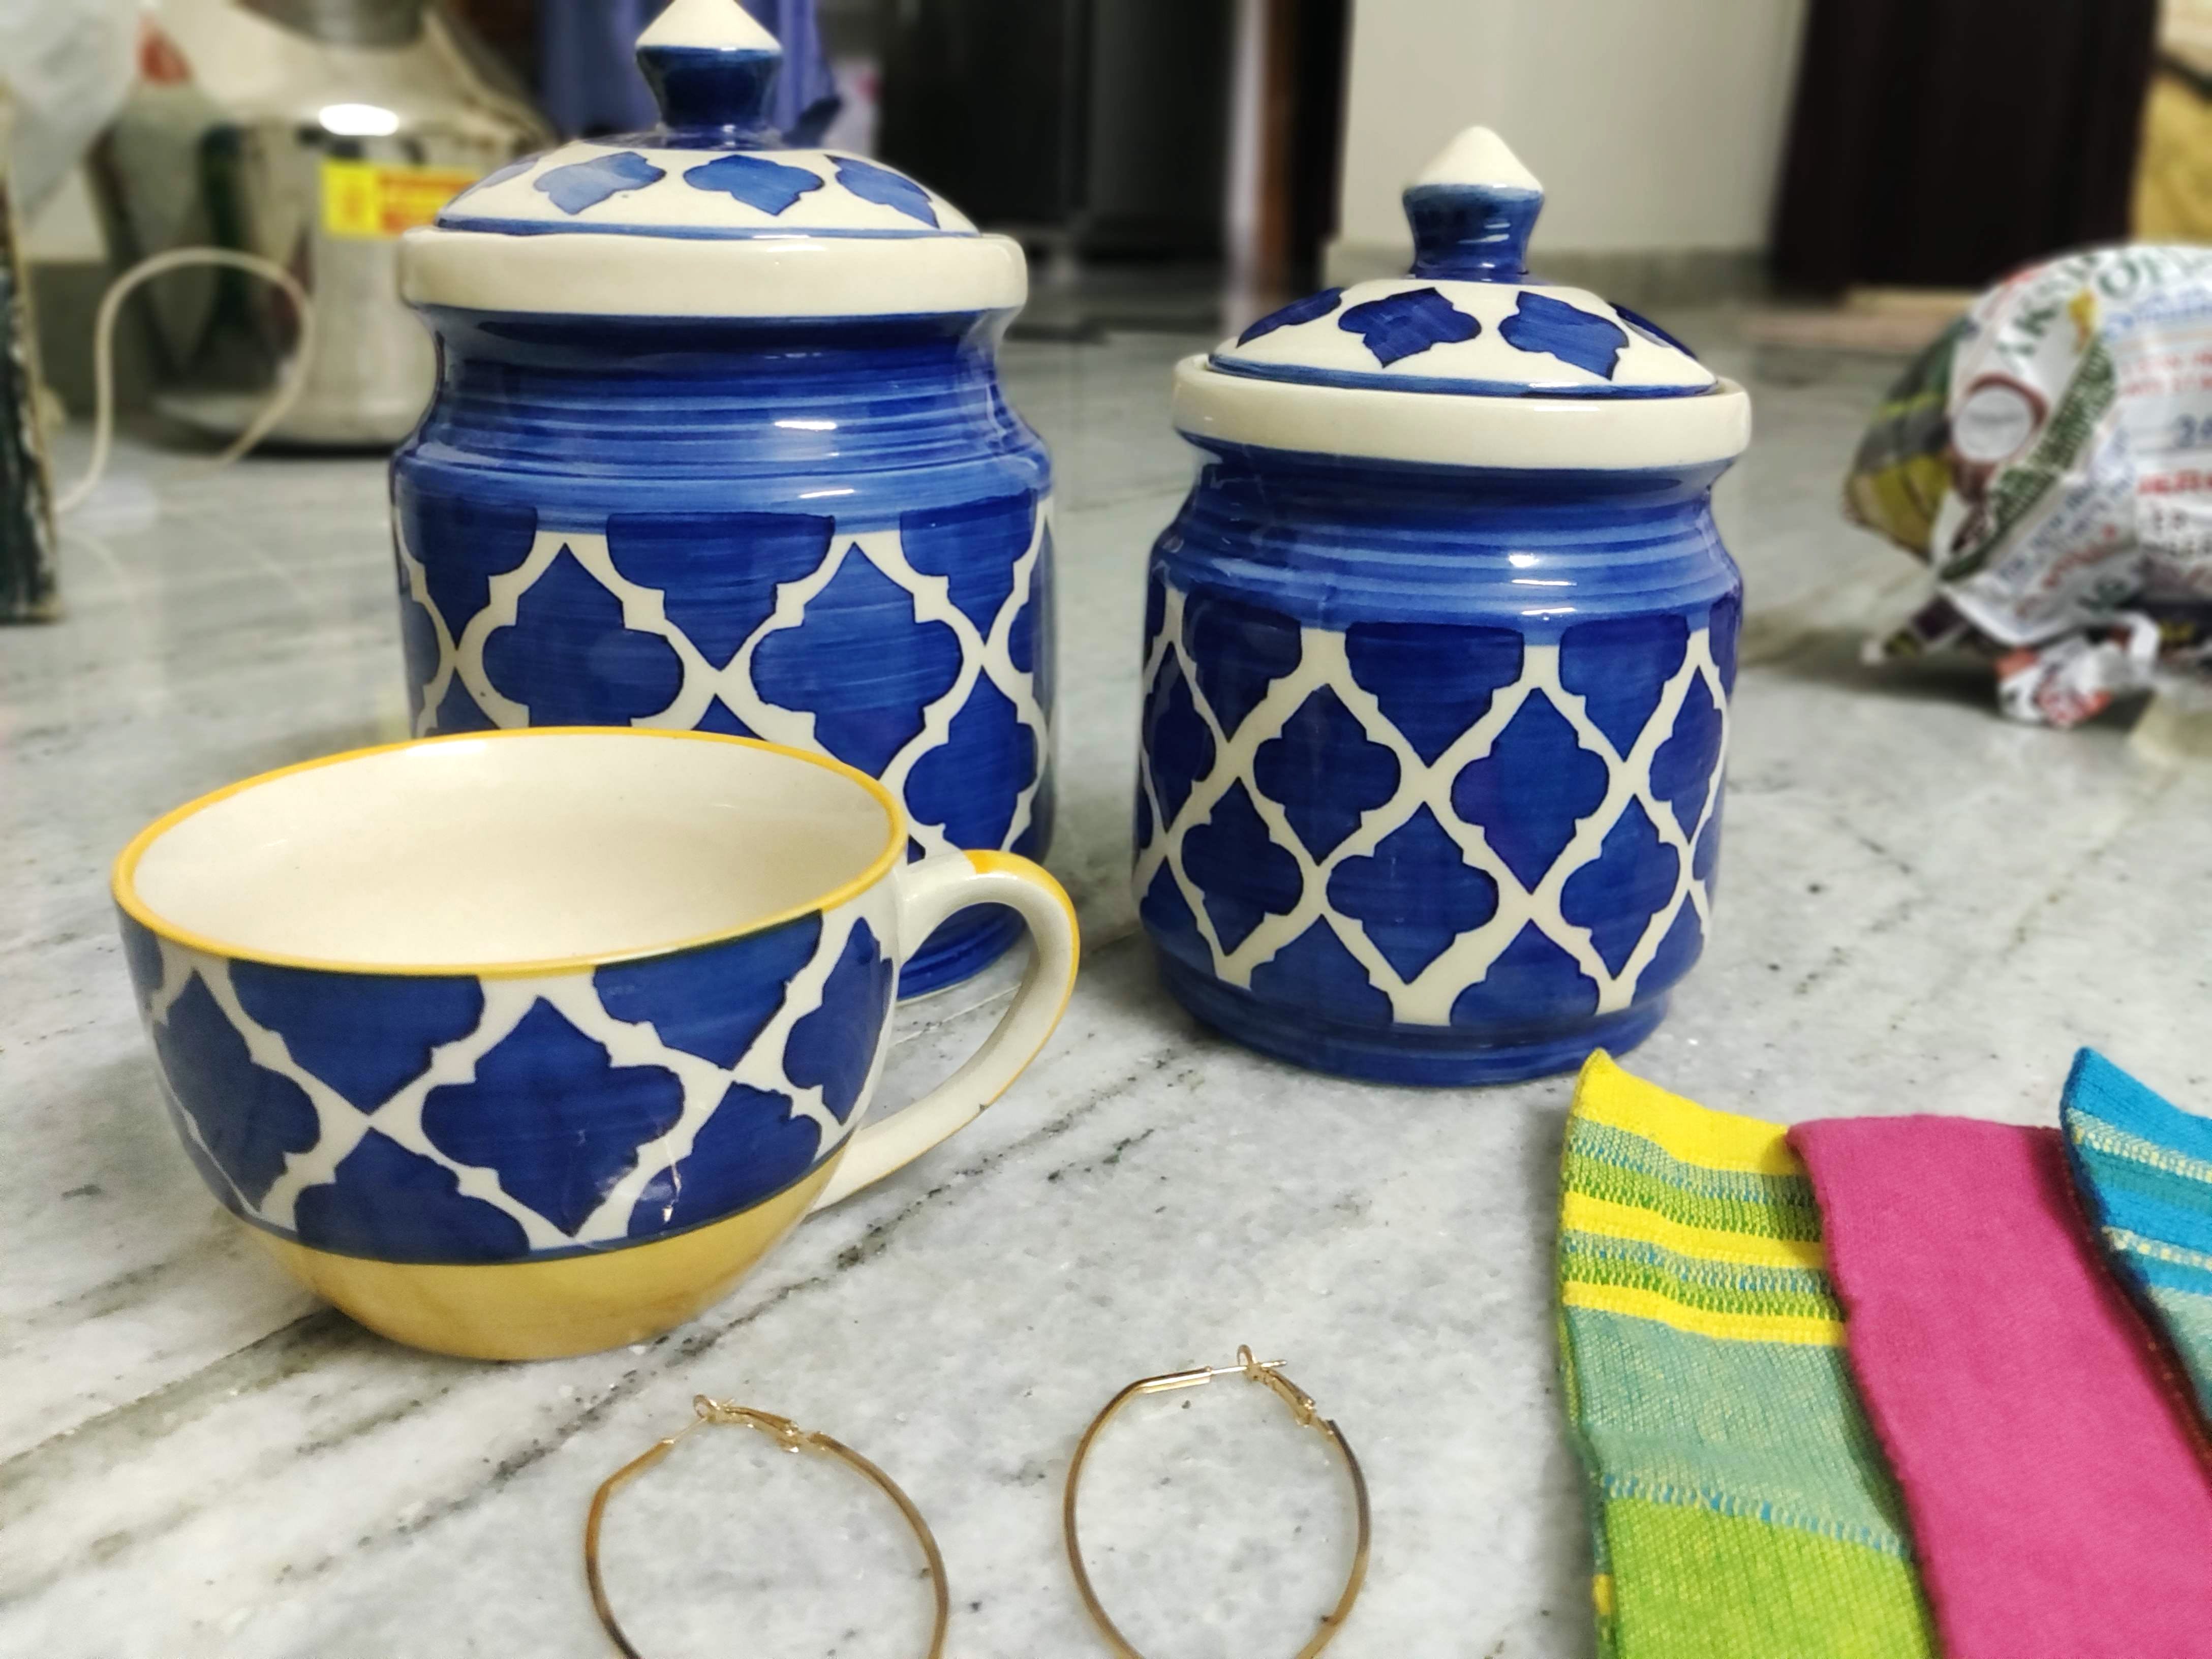 Porcelain,Blue,Cobalt blue,earthenware,Lid,Ceramic,Dishware,Dinnerware set,Pottery,Tableware